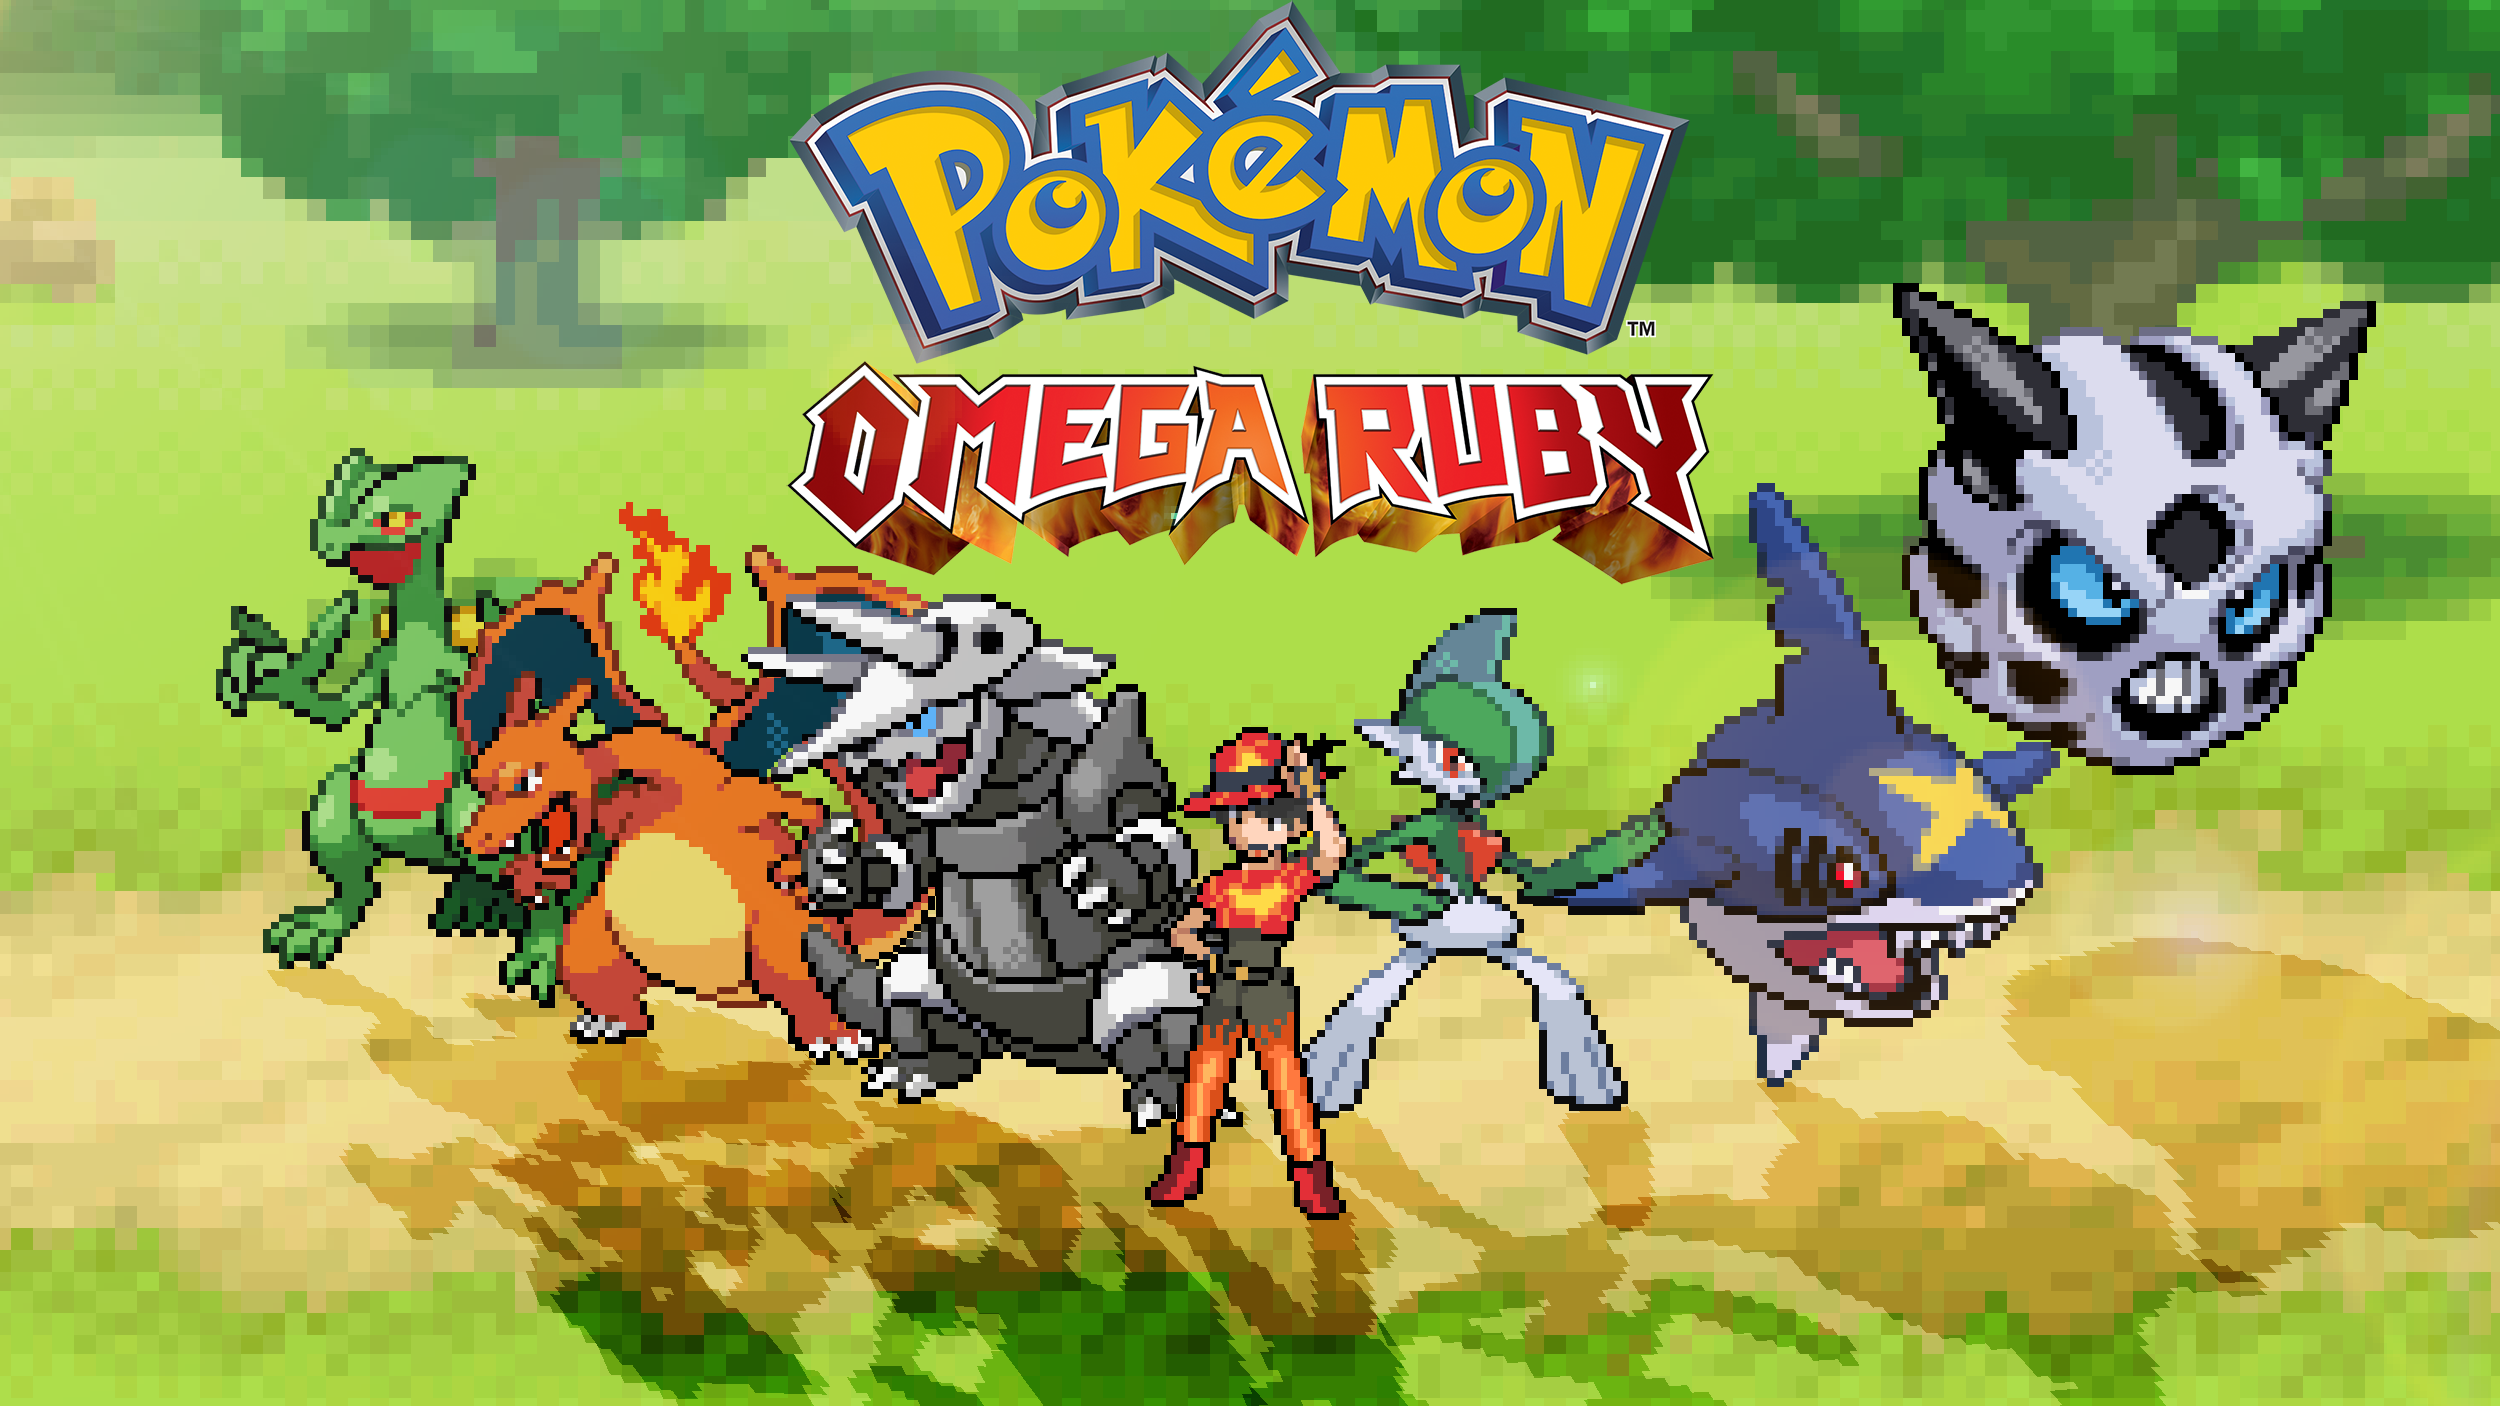 Pokemon Omega Ruby team by scott910 on DeviantArt